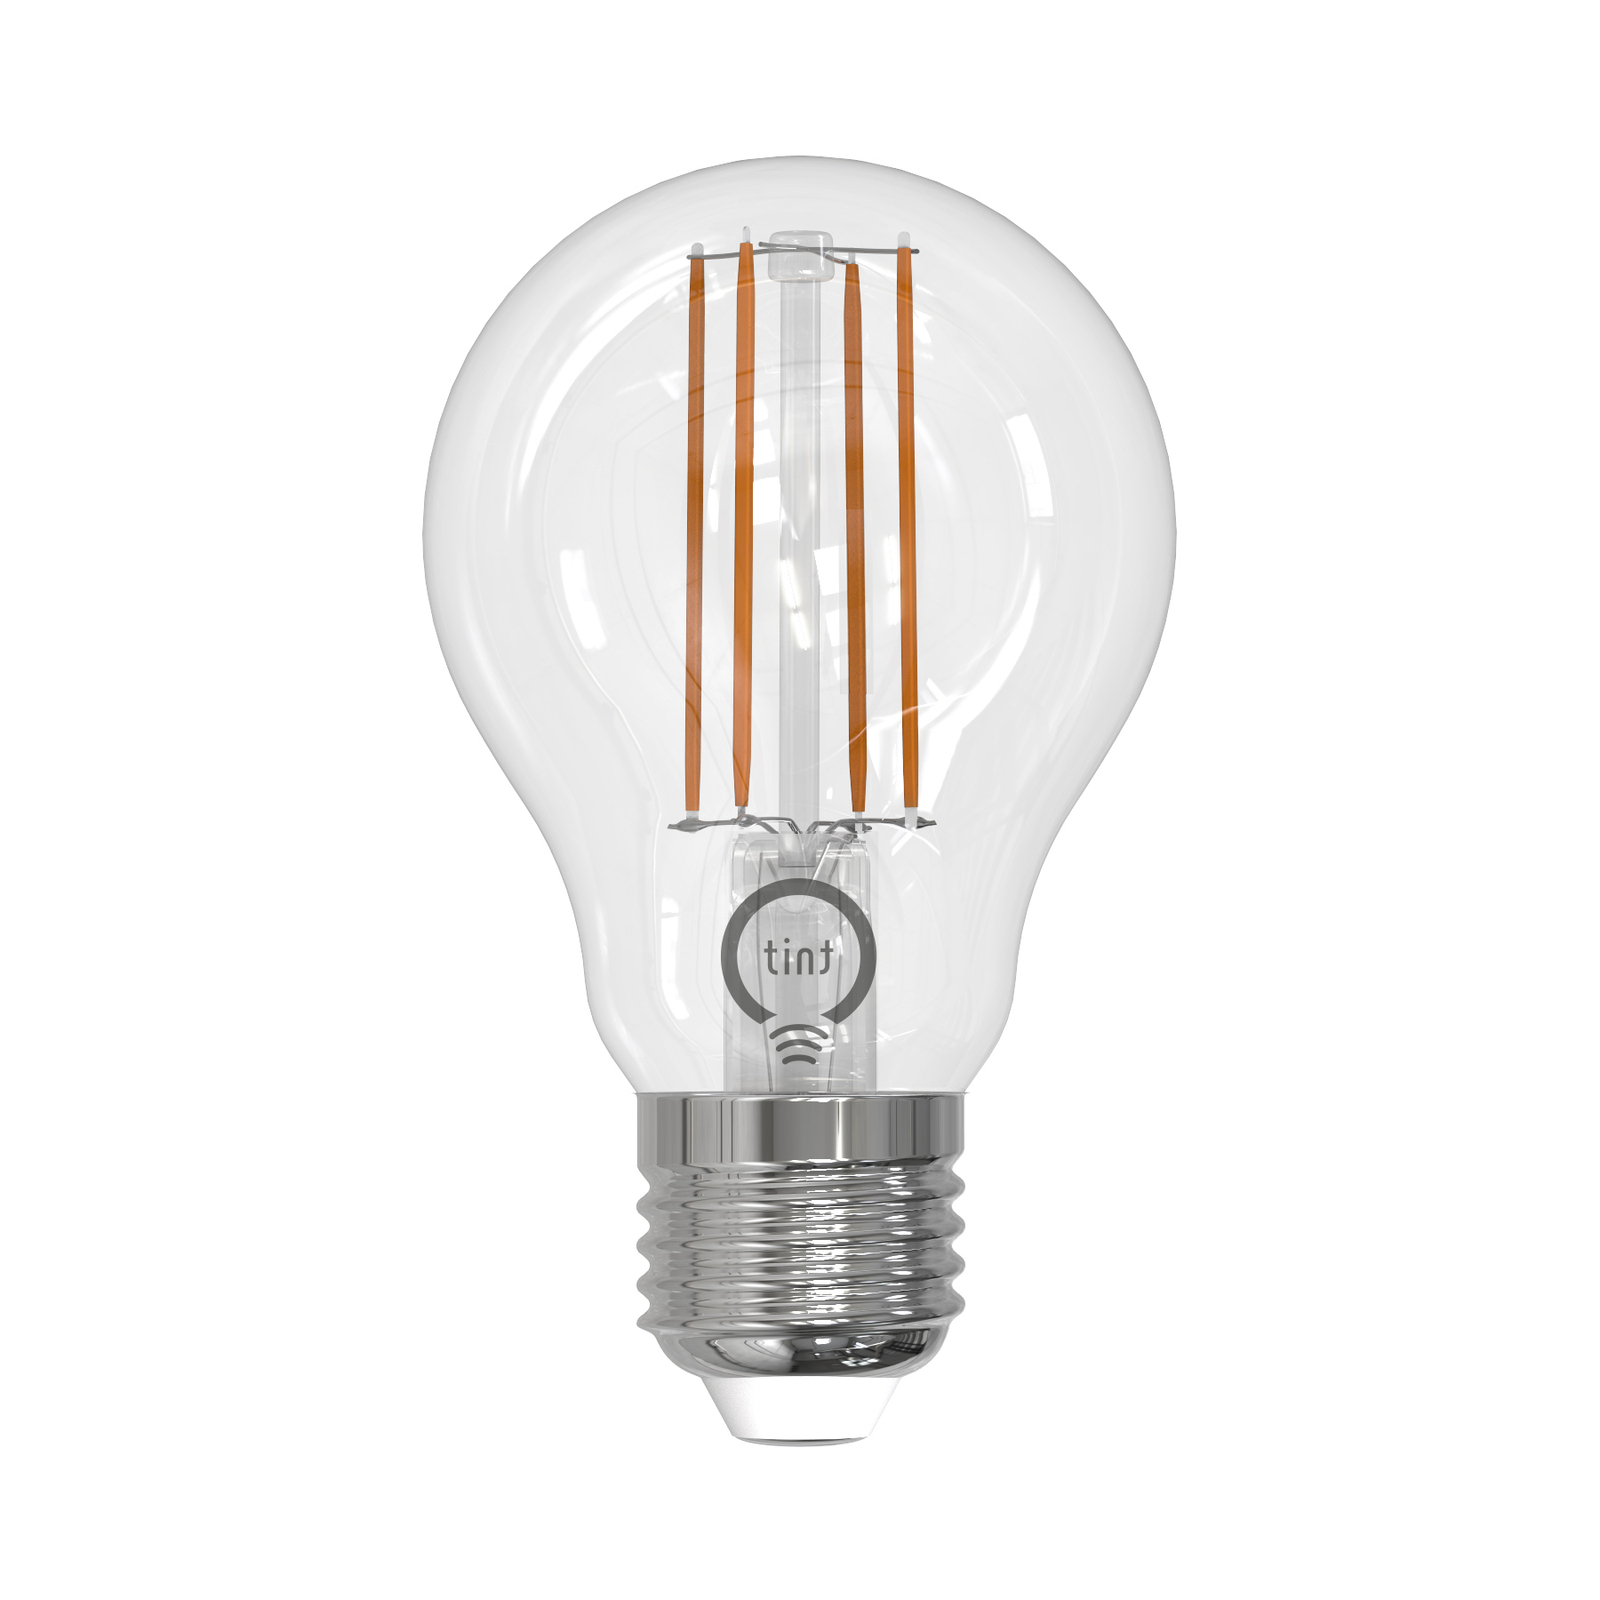 Müller Licht tint LED lâmpada de incandescência E27 7W CCT